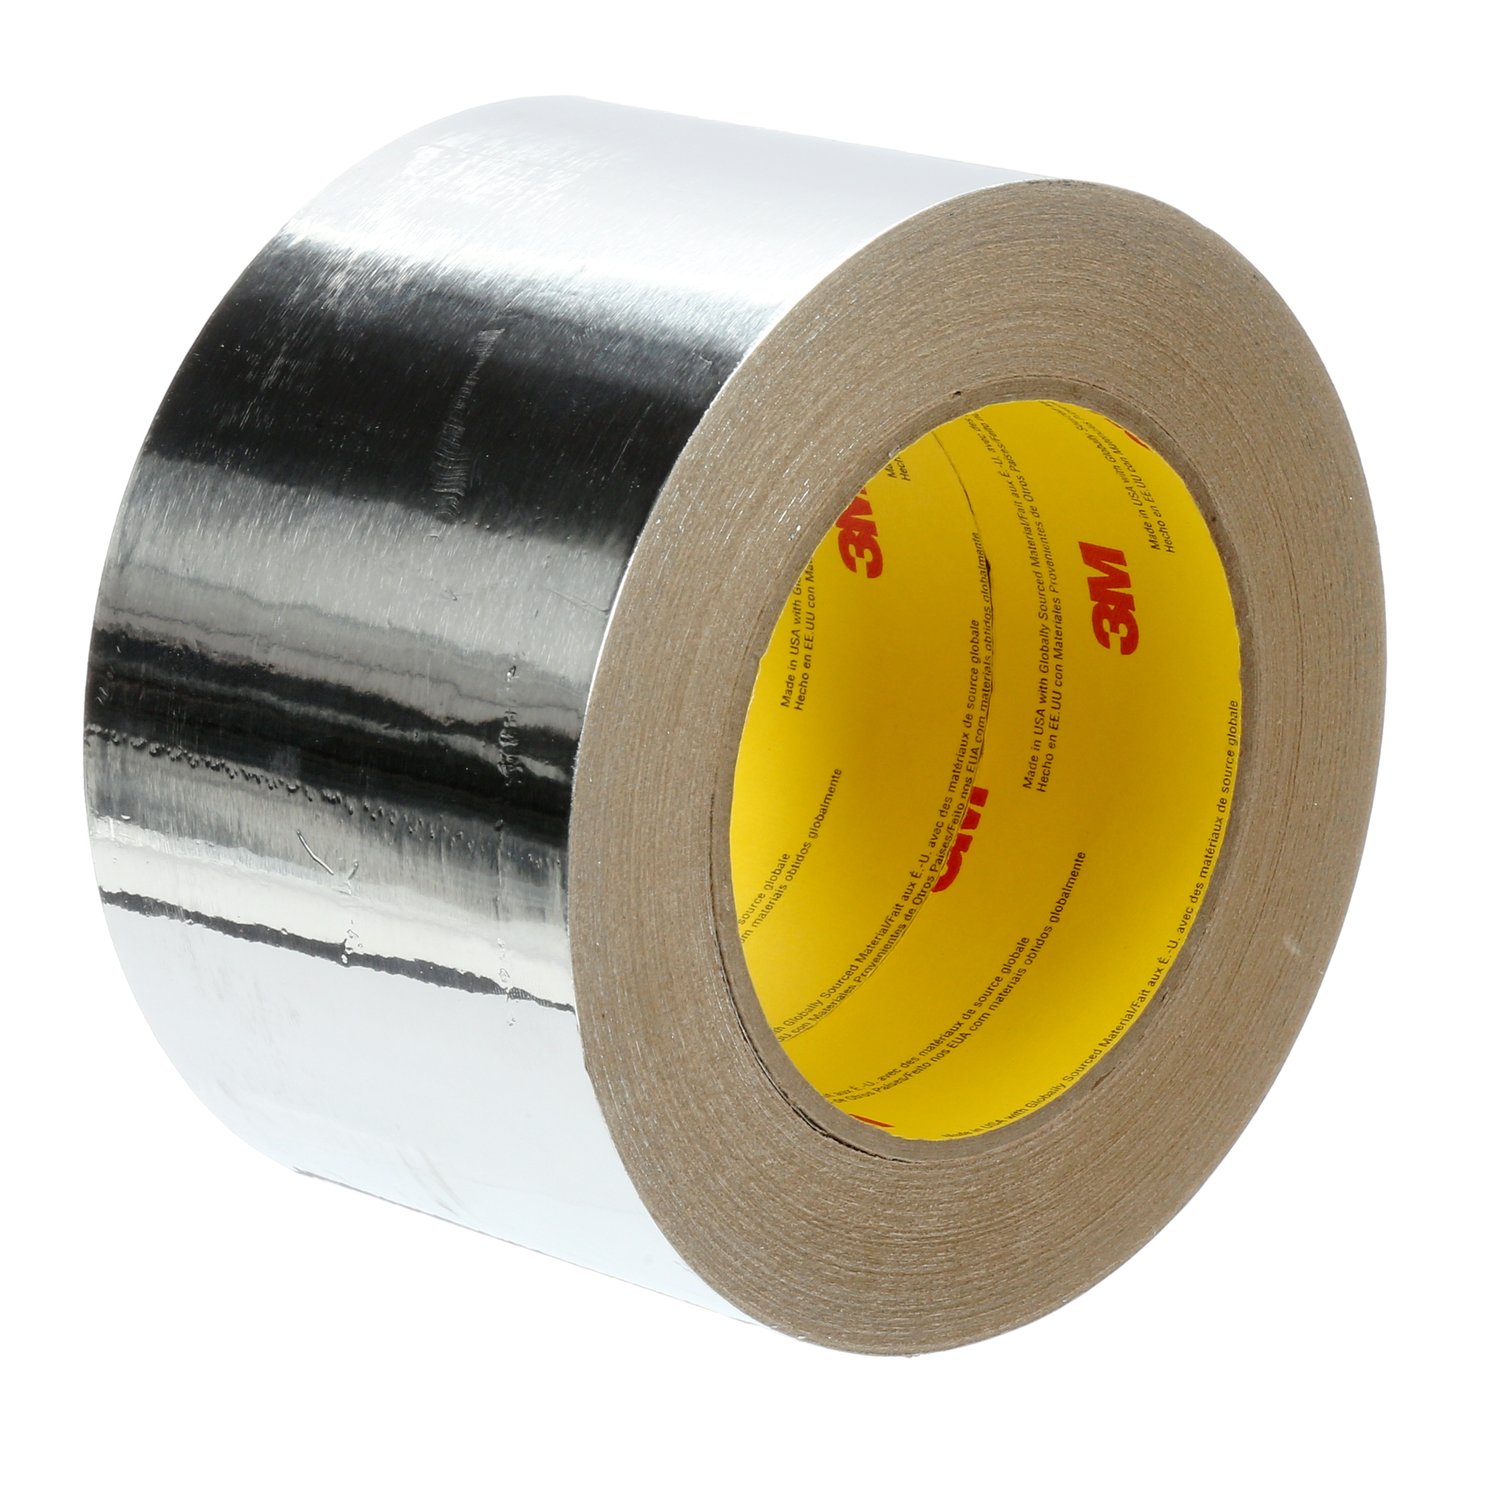 7100043752 - "3M Venture Tape Aluminum Foil Tape 1521CW, Silver, 72 mm x 45.7 m,
2.8
mil, 16 Rolls/Case"